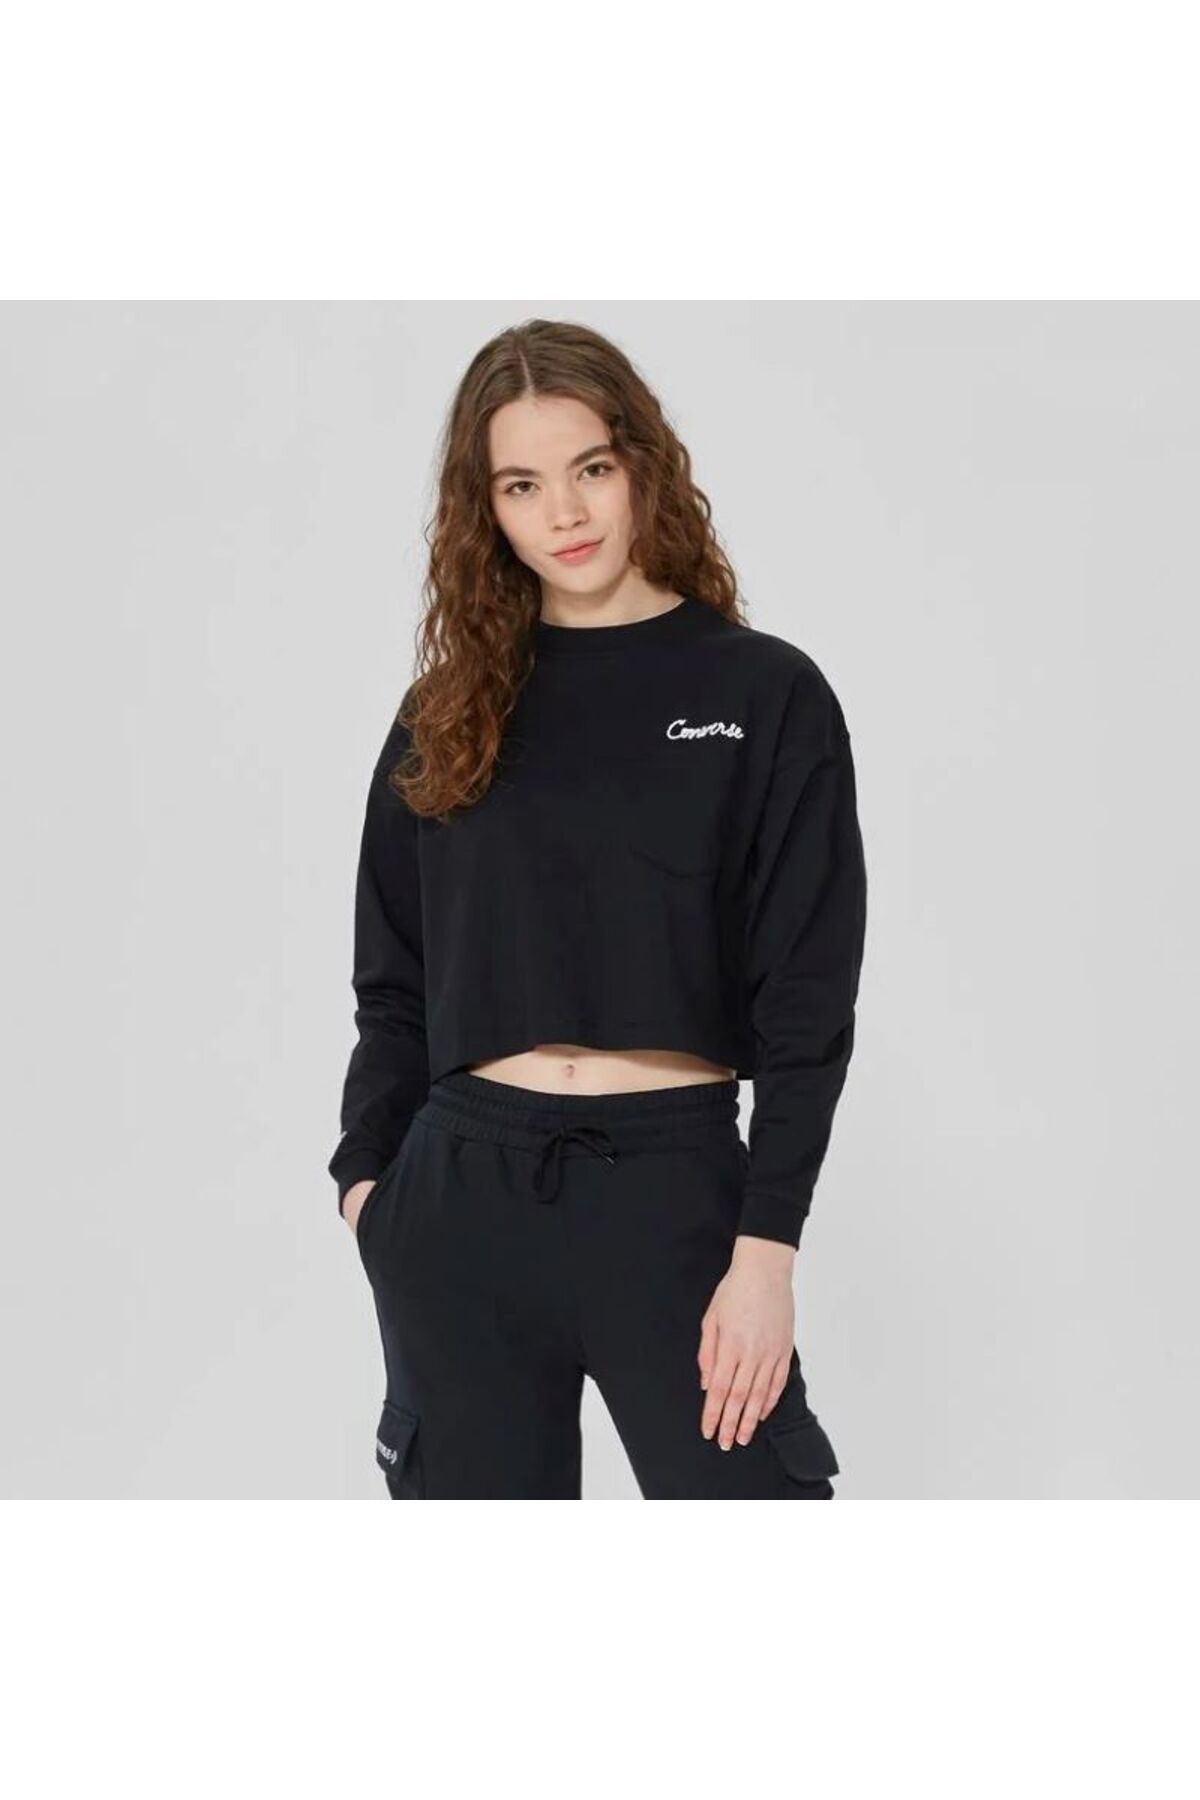 Converse Fashion Crop Ls Pocket Top Kadın Siyah Sweatshirt